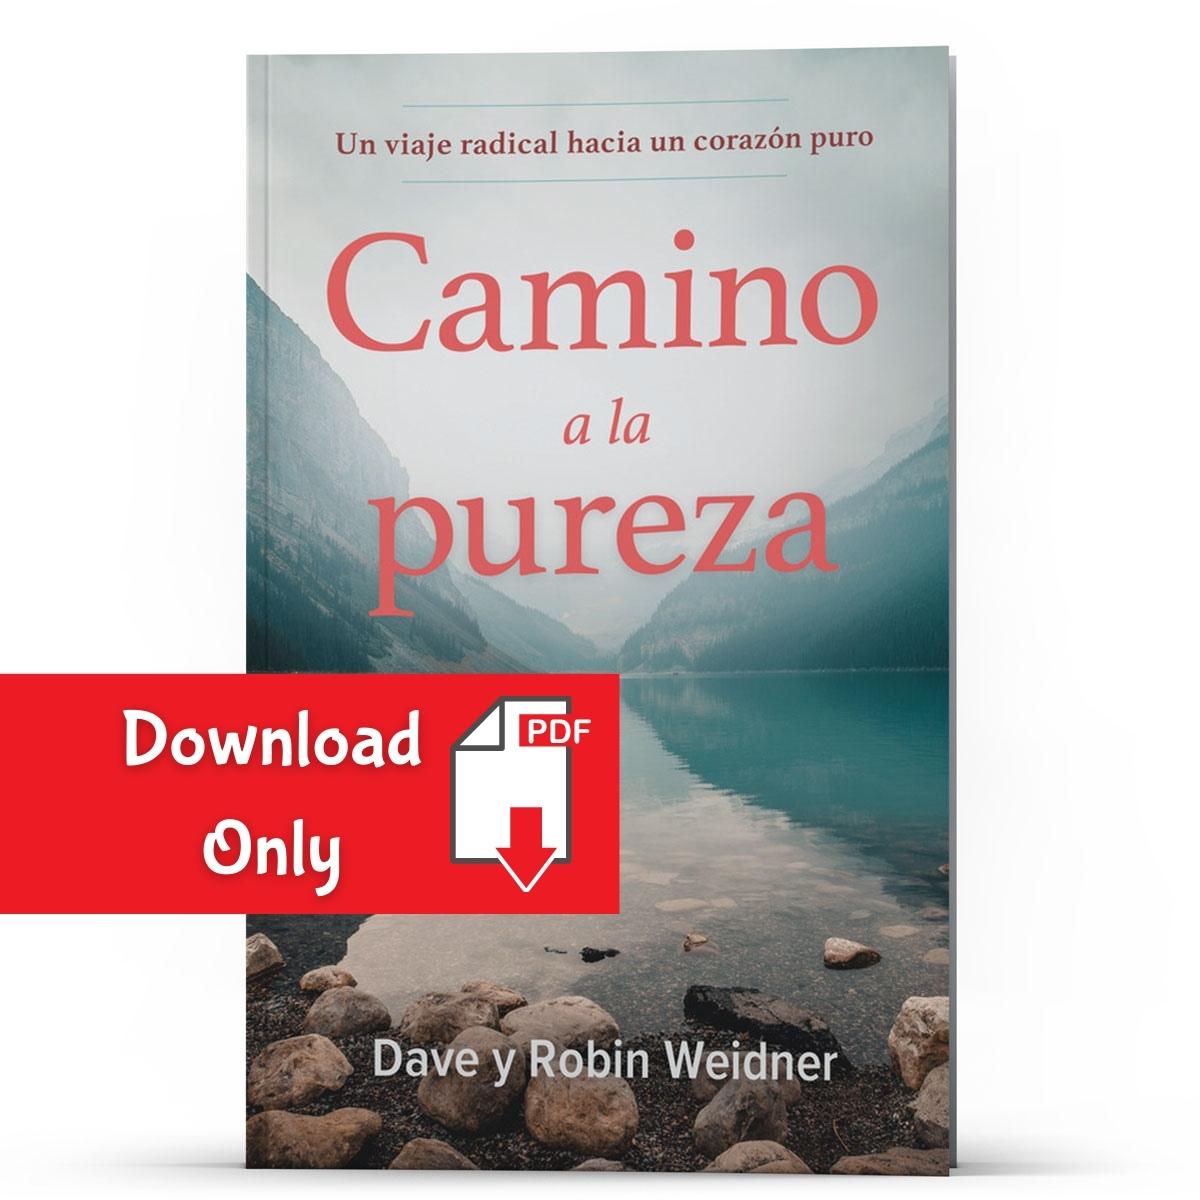 Camino a la pureza (Electronic PDF) - Illumination Publishers